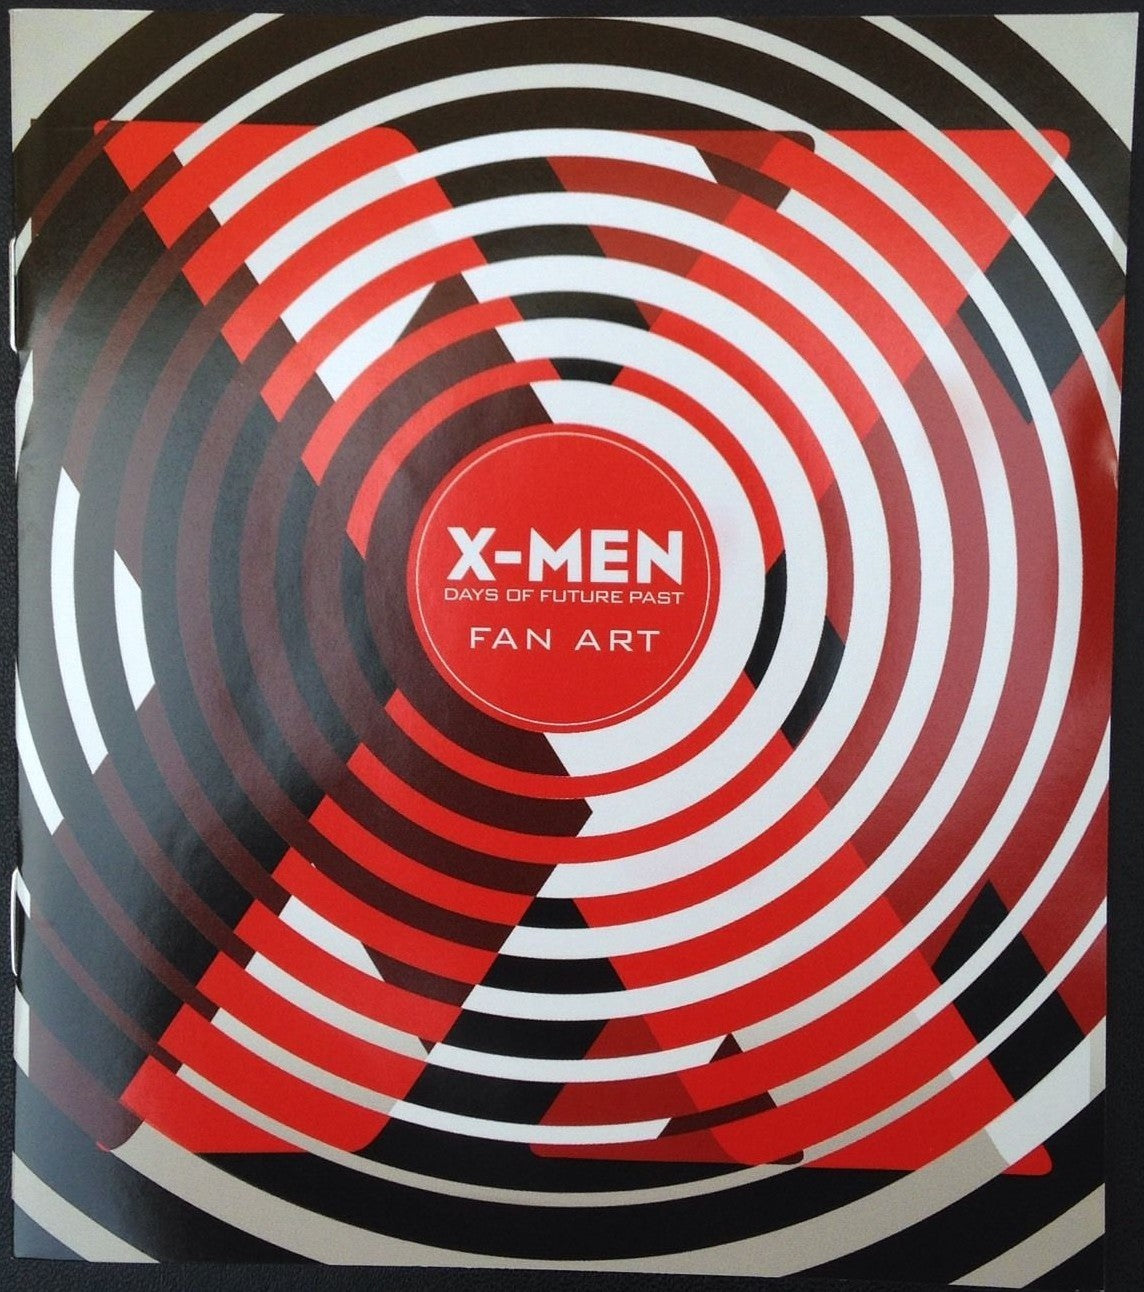 X-Men Days of Future Past fan art booklet